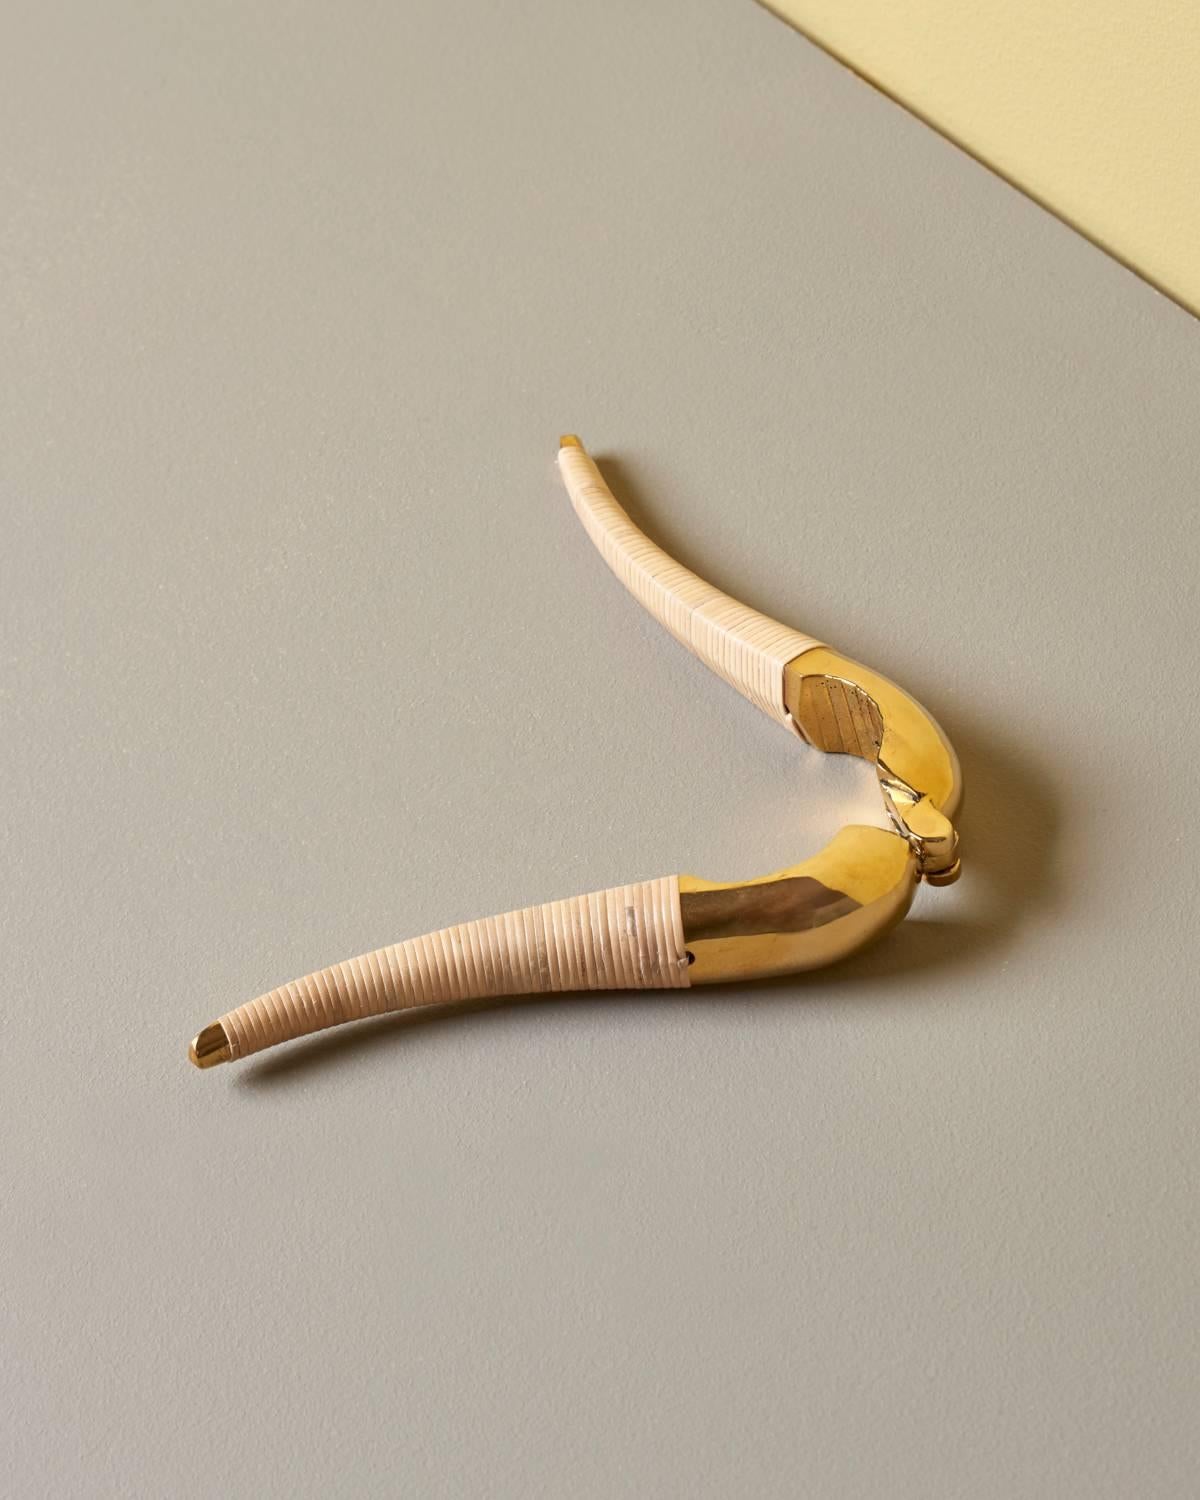 Nutcracker with cane #4051 by Carl Auböck.

